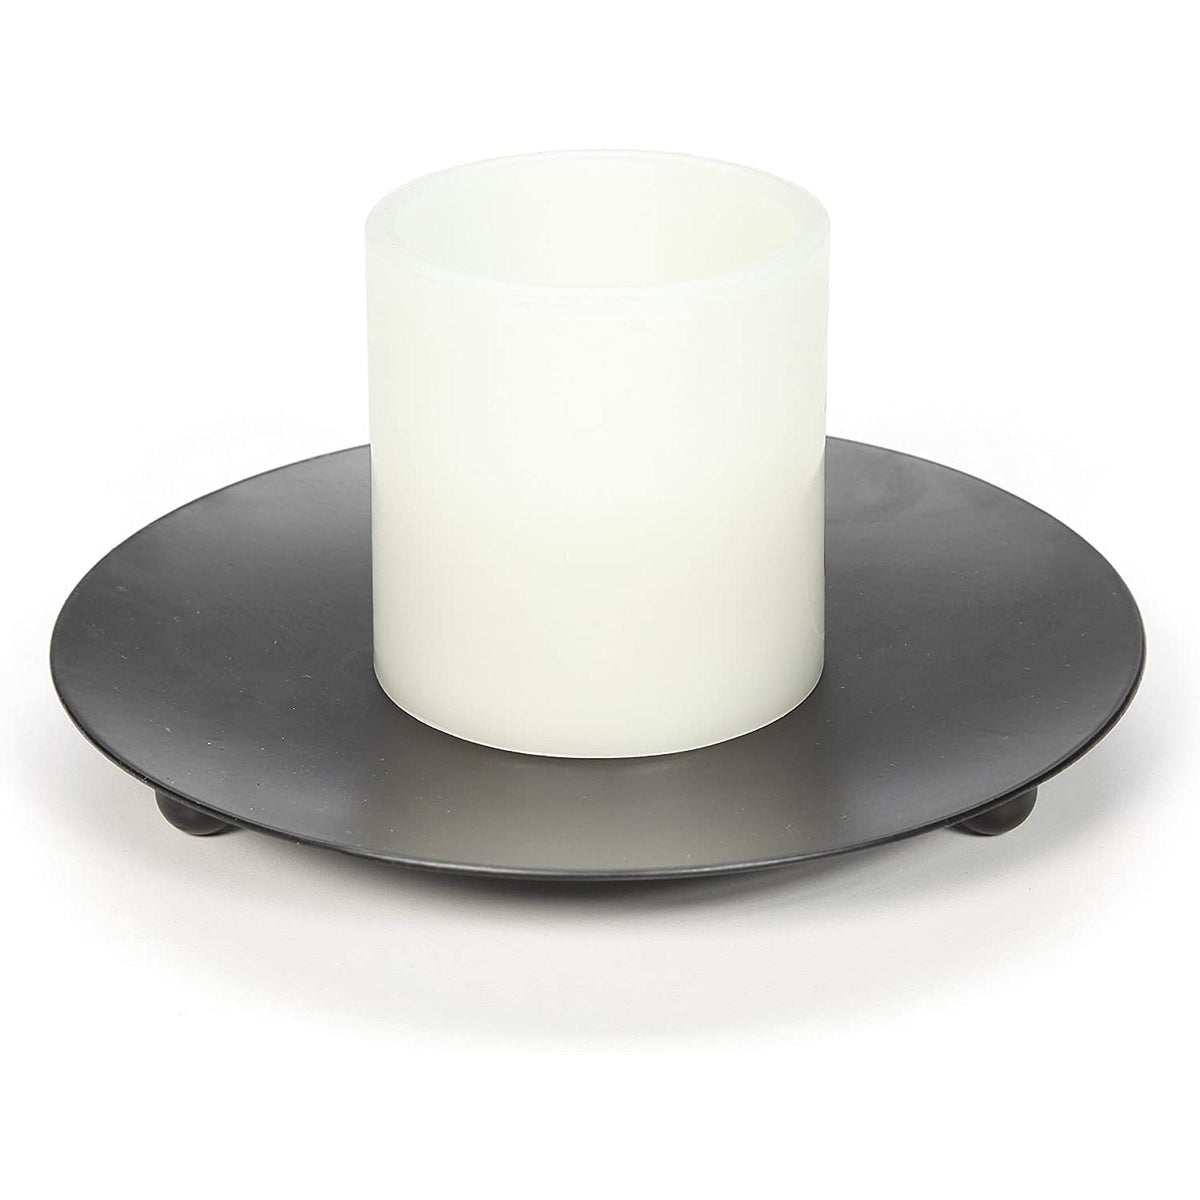 HOSLEY®  Iron Pillar Plates, Black Color, Set of 6, 7 inches Diameter each